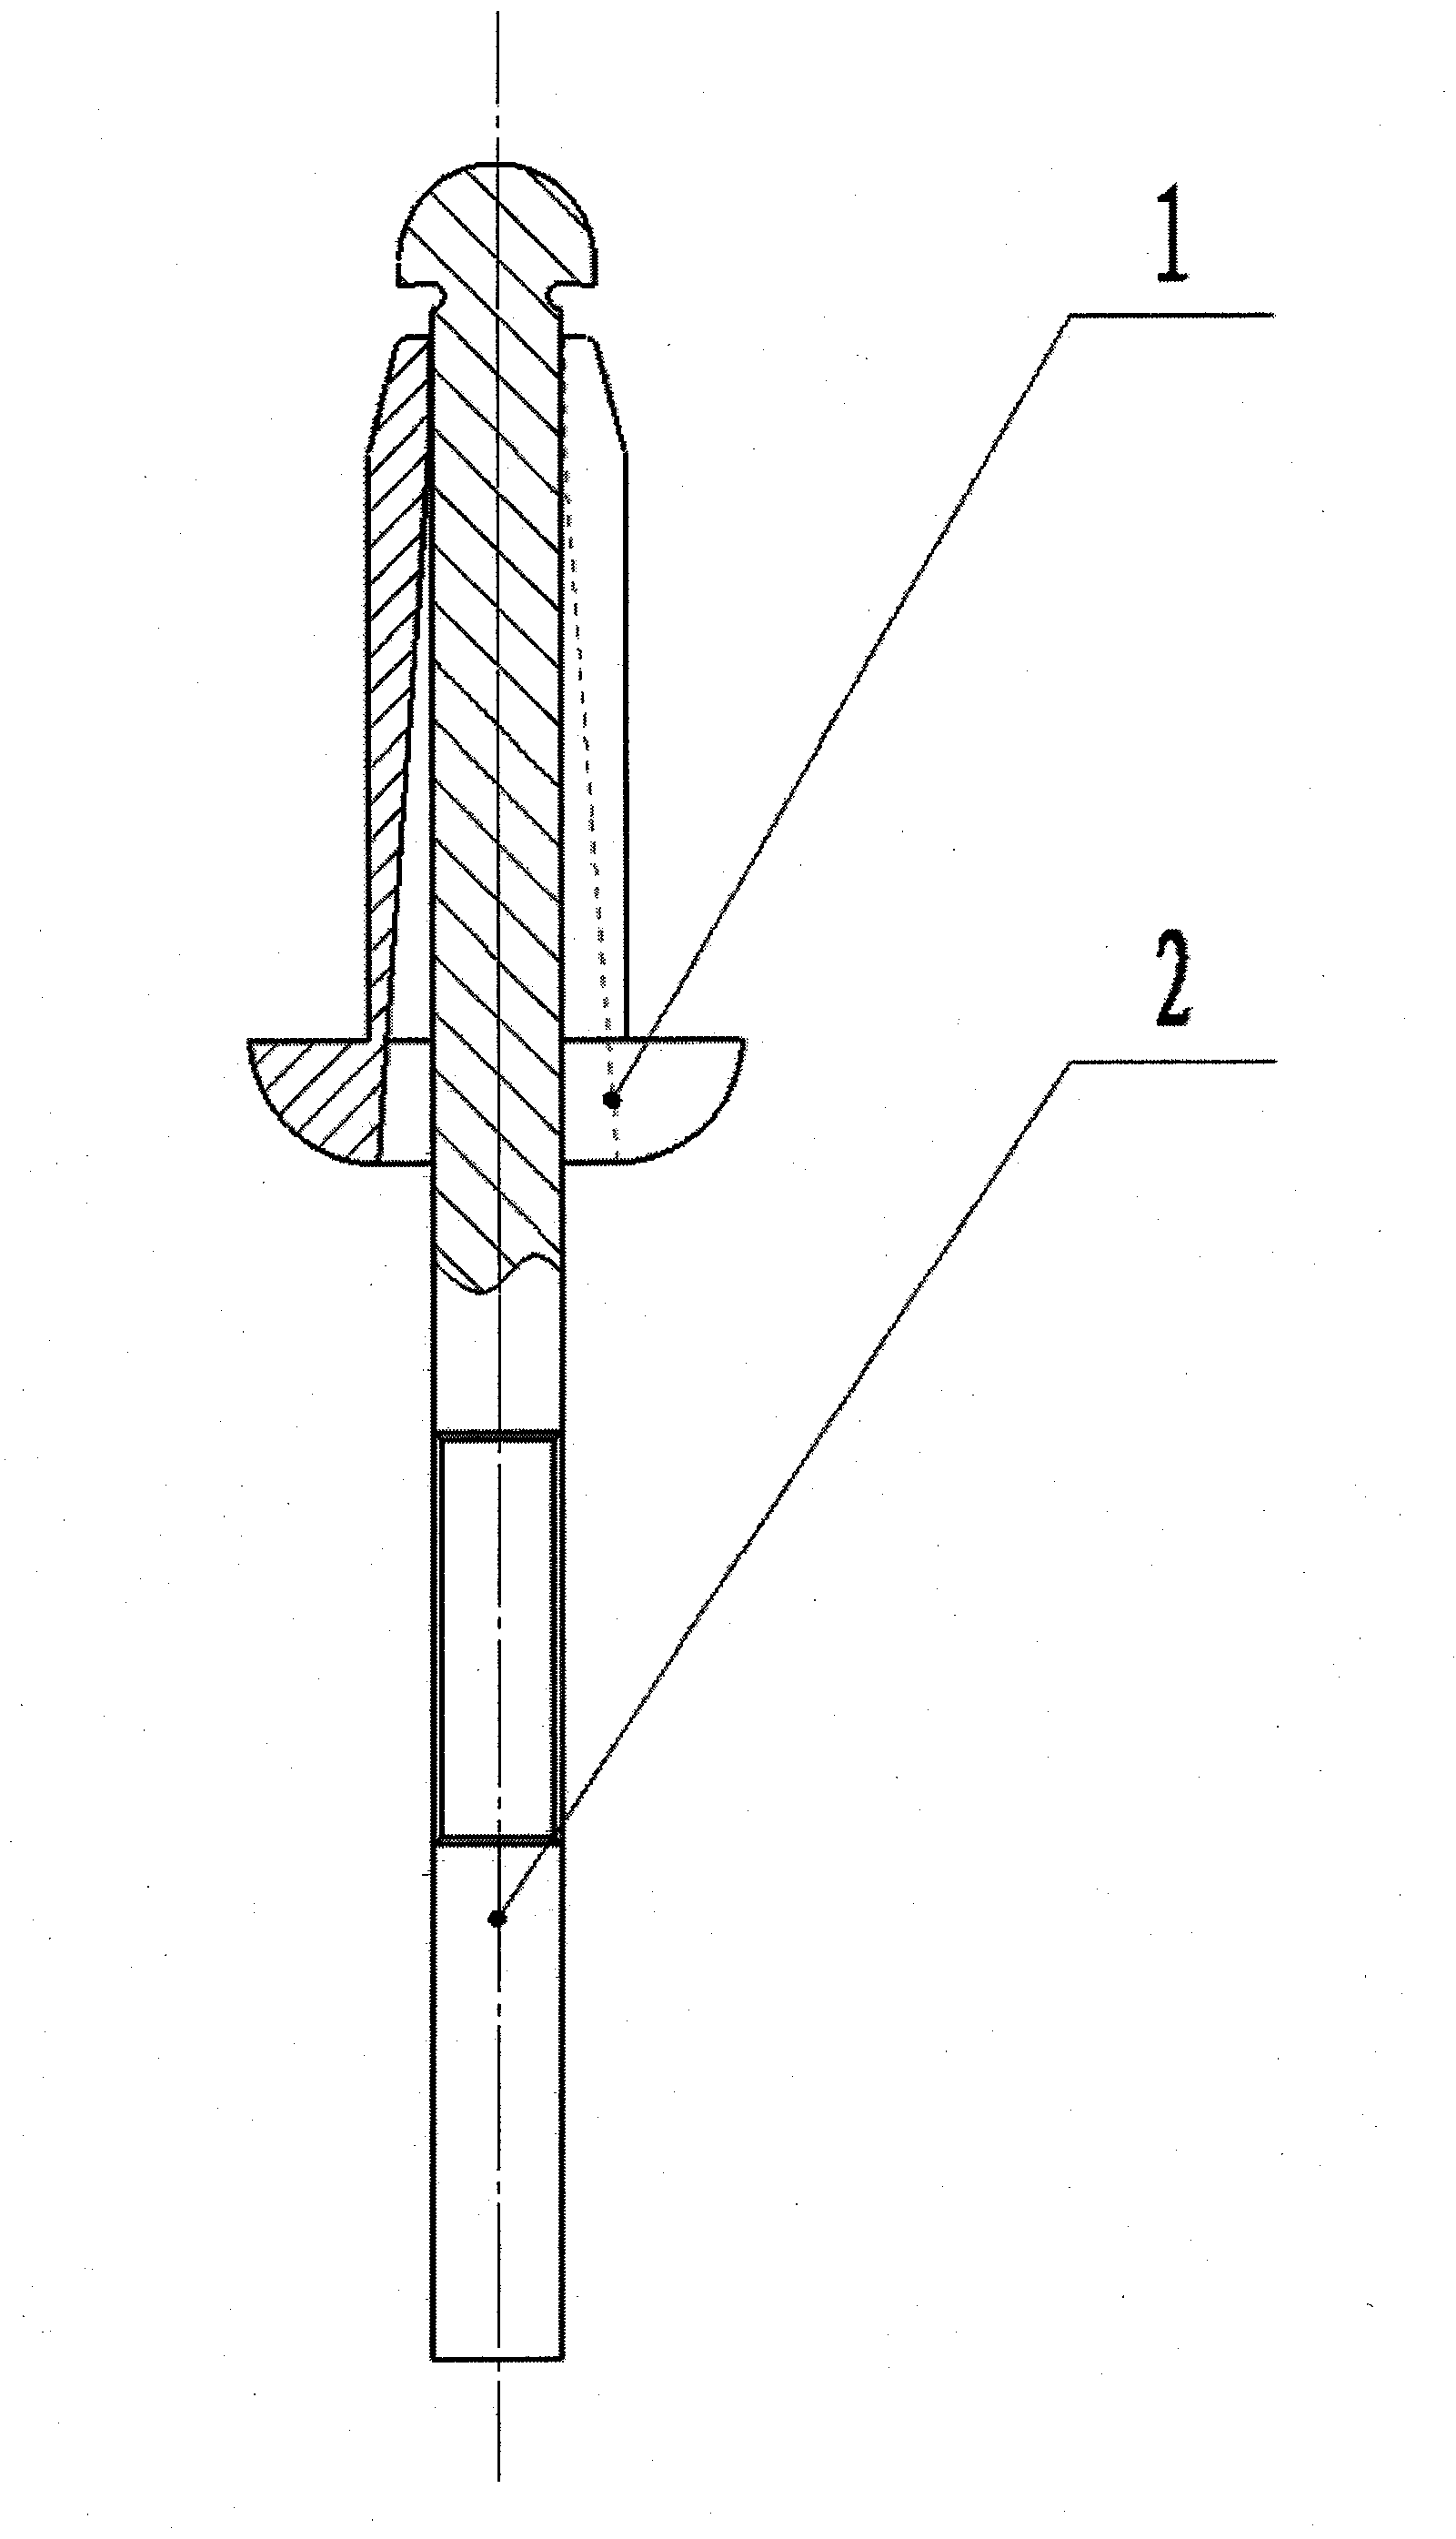 Circulation type rivet with rivet core